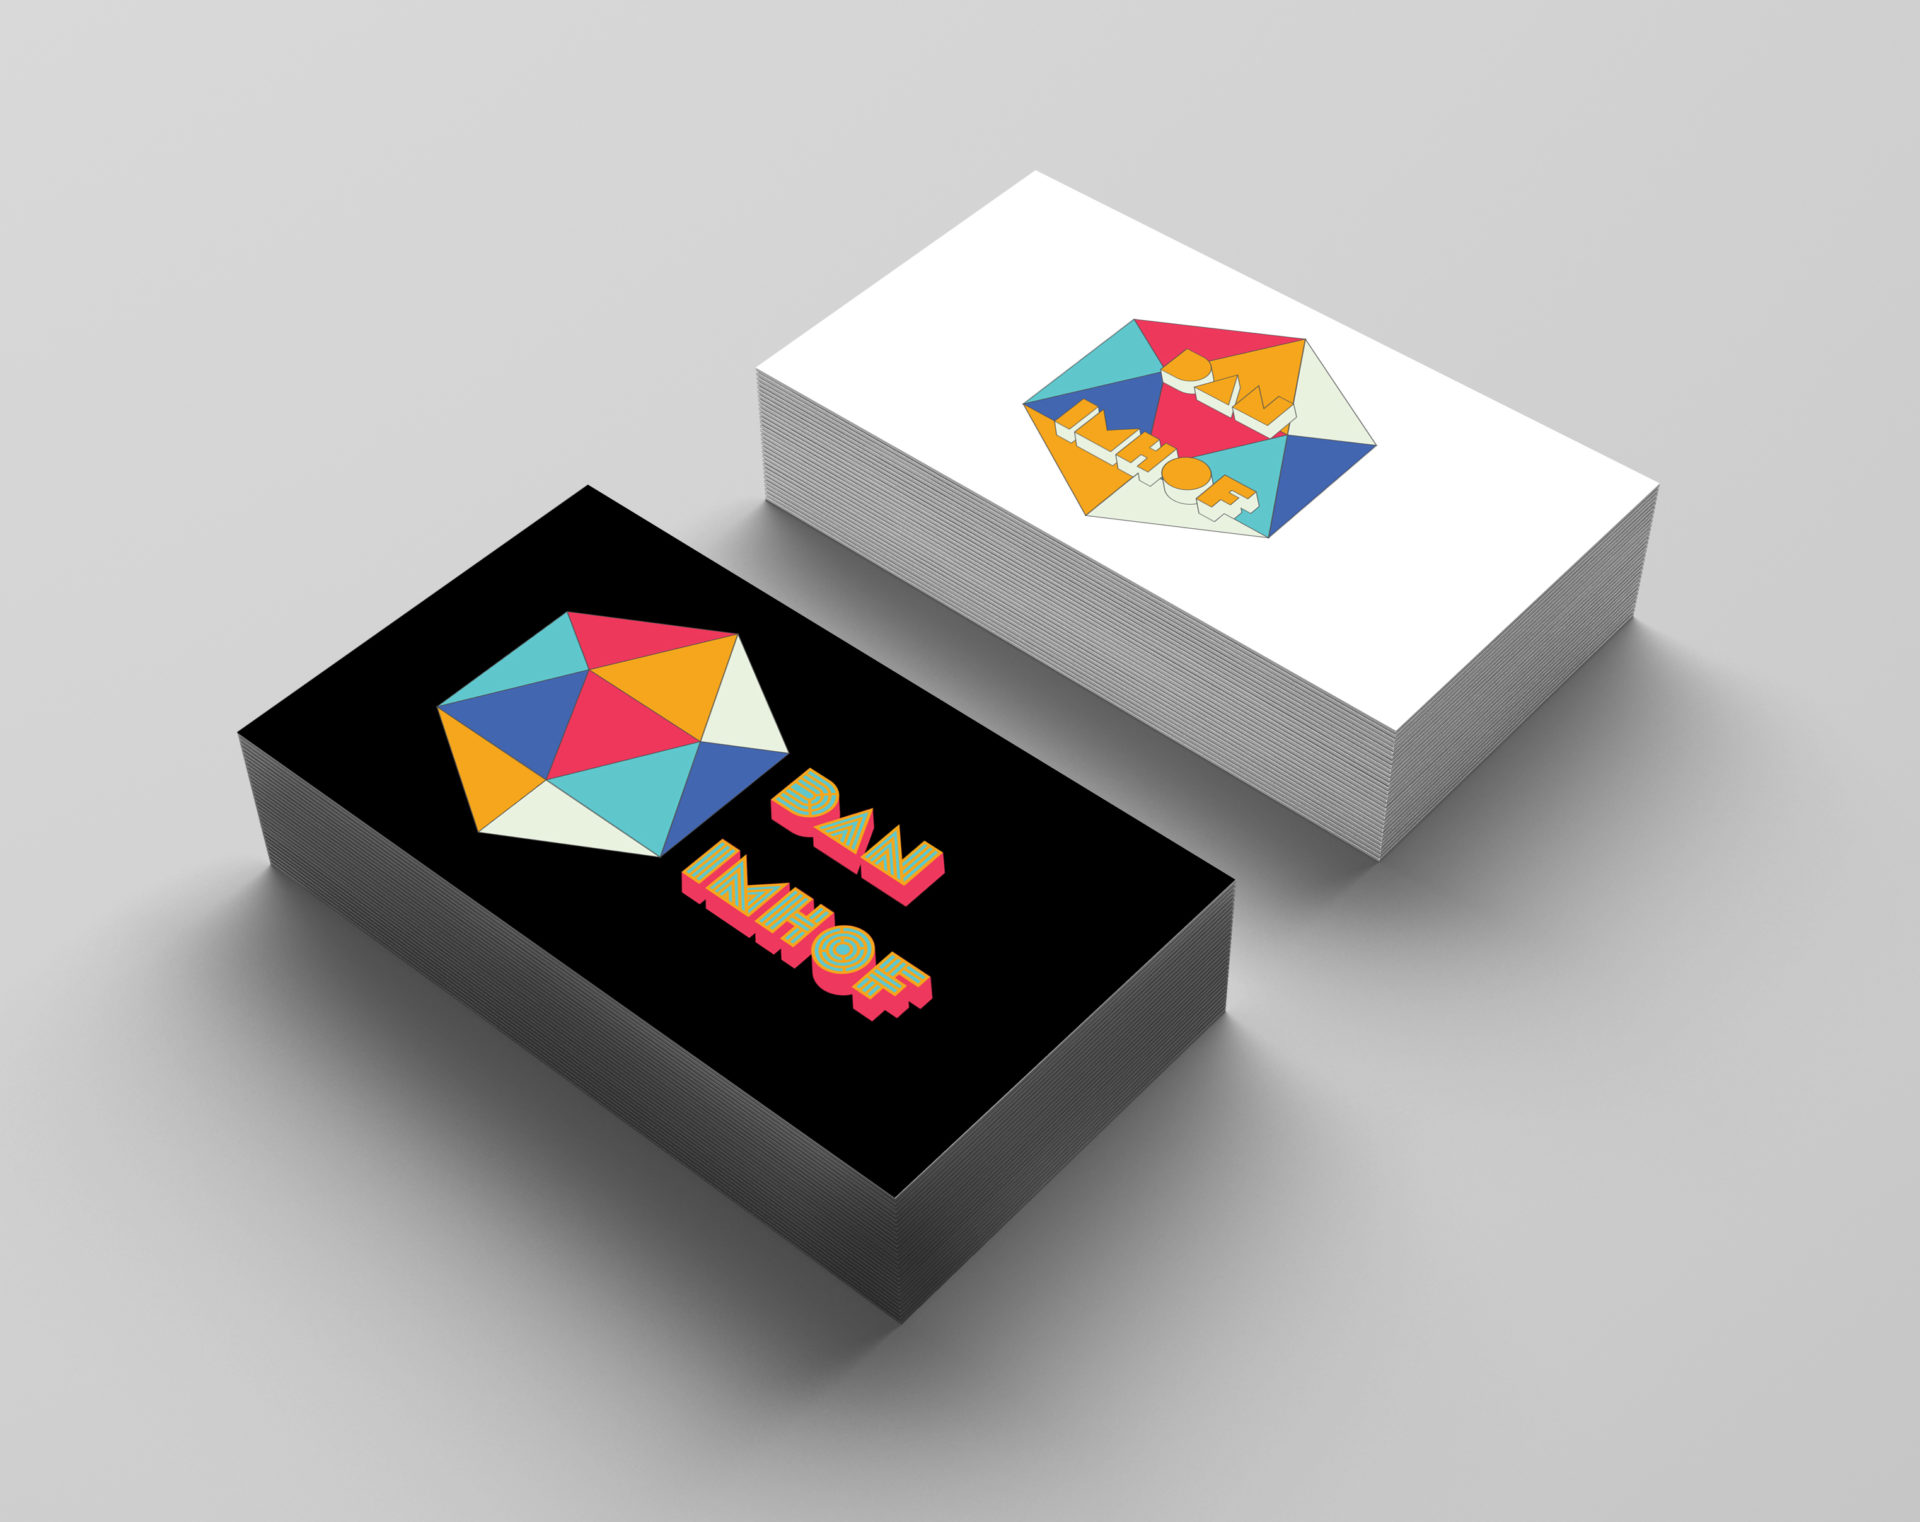 qda design visitenkarte mit logo dan imhof visitenkarte